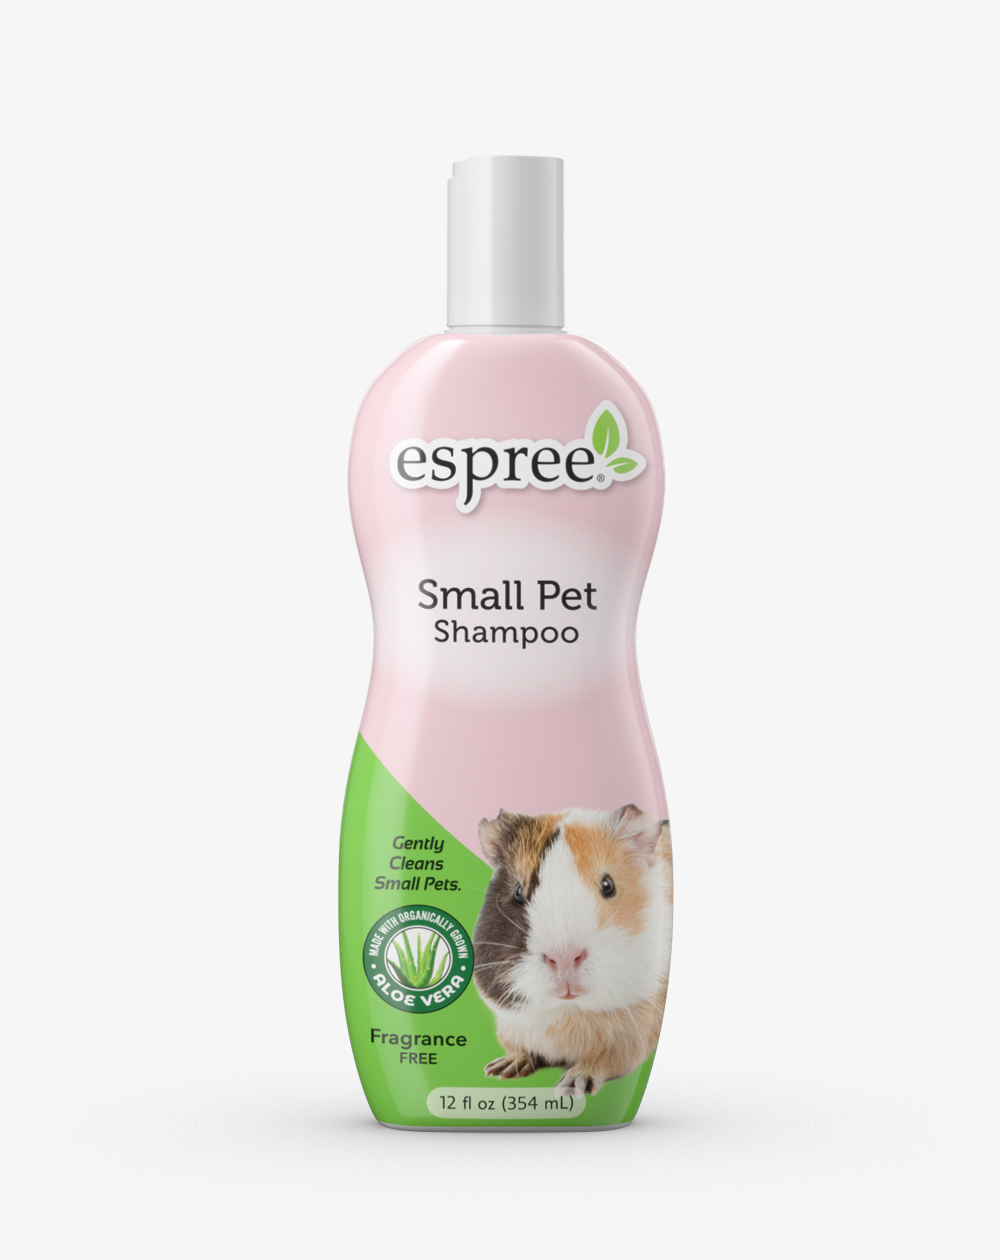 pets at home guinea pig shampoo